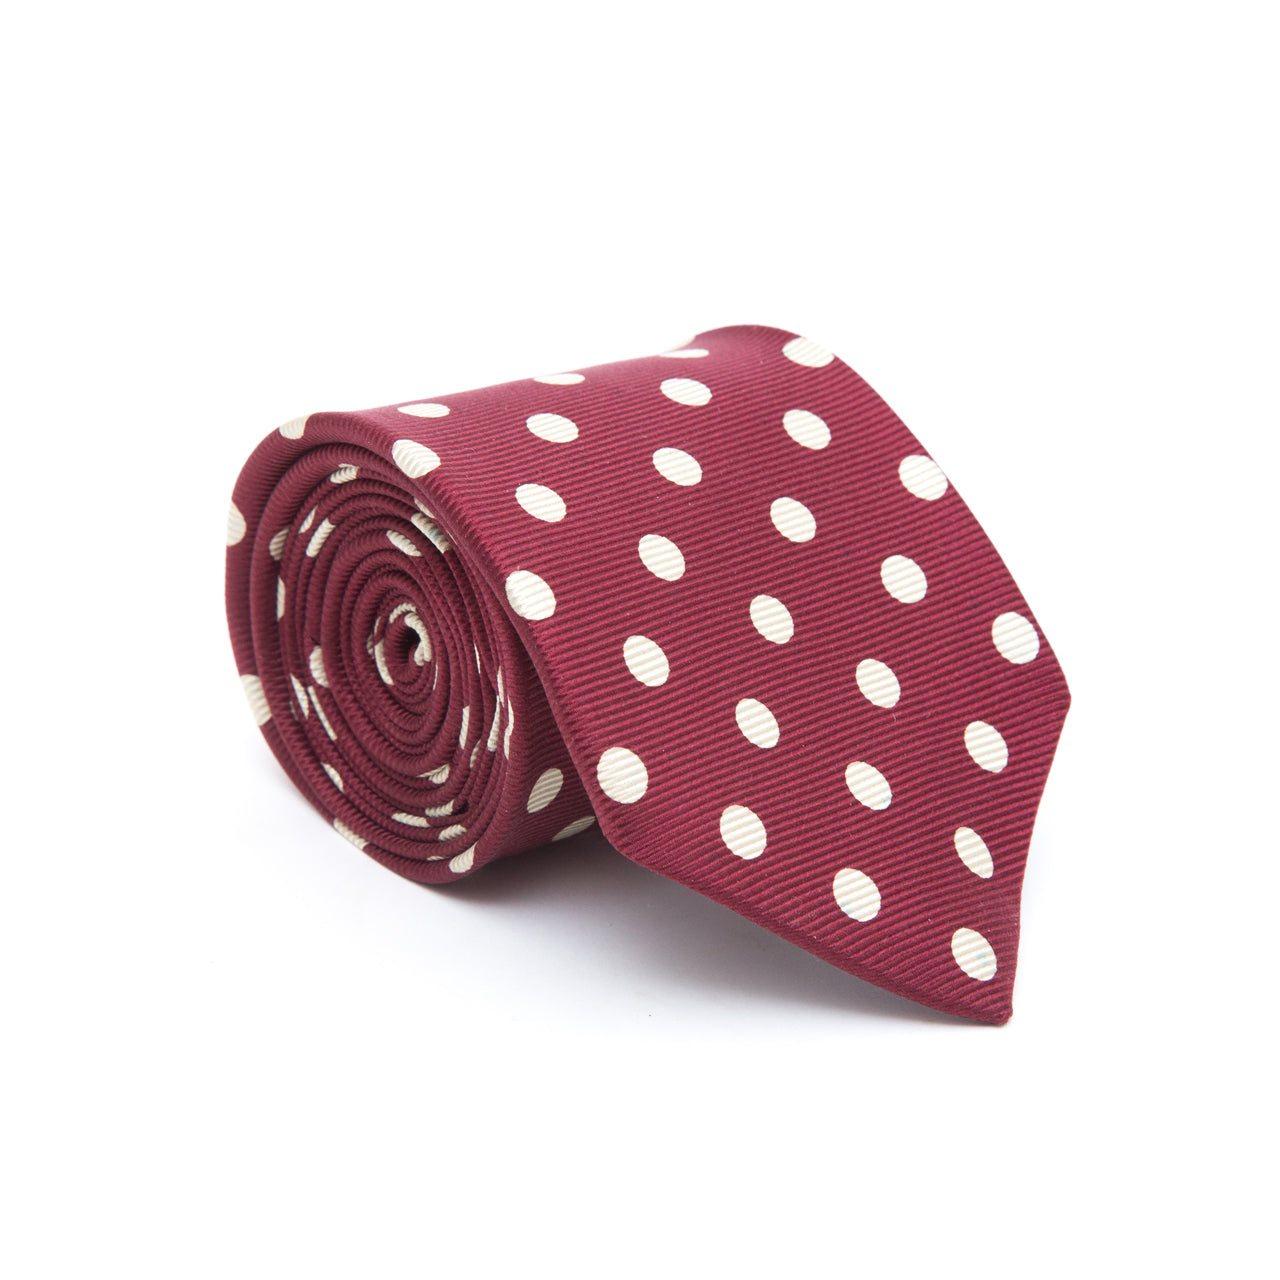 Burgundy speckled tie